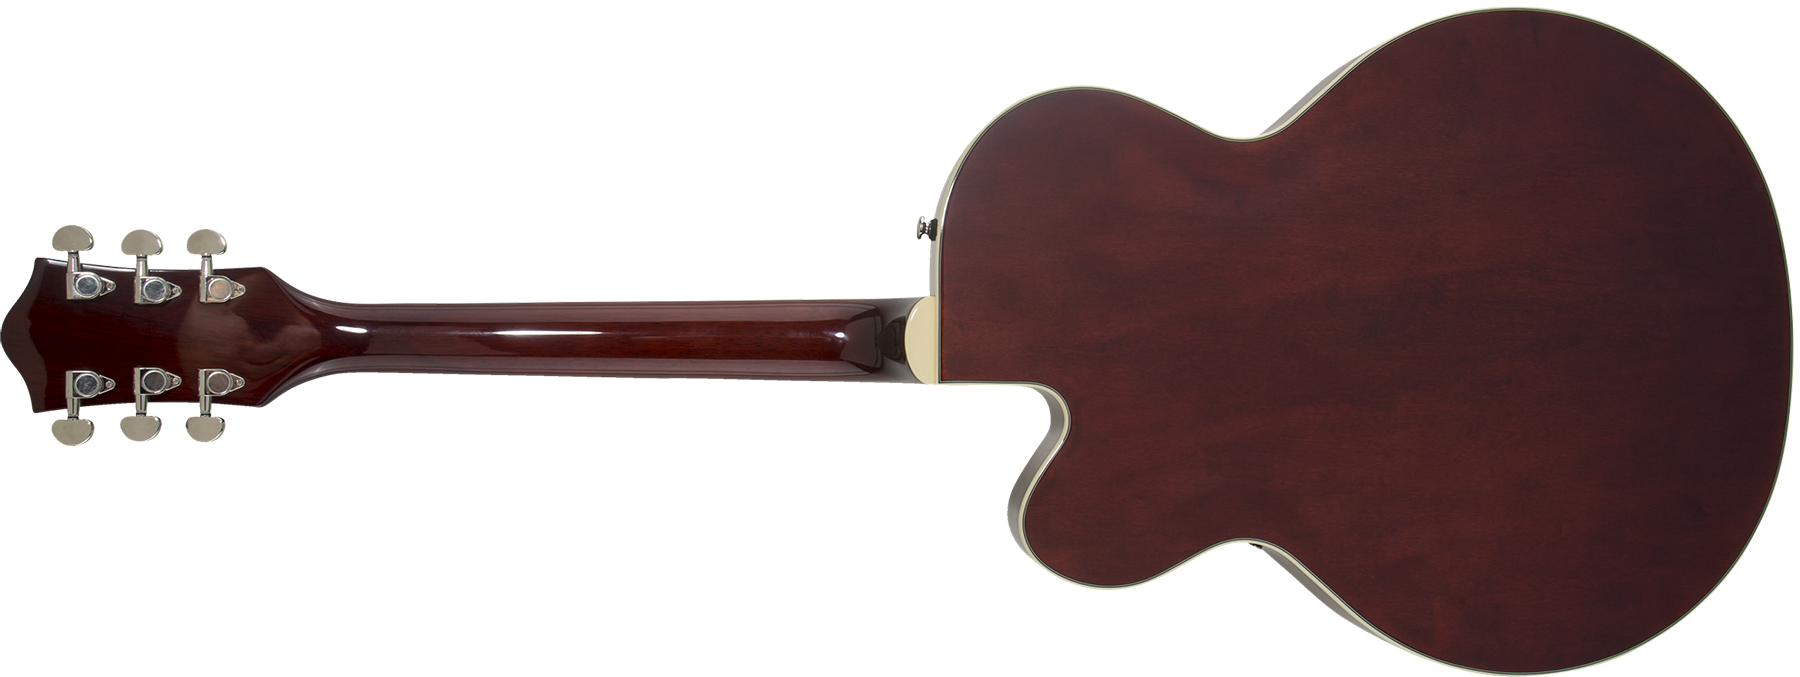 Gretsch G2420 Streamliner Hollow Body With Chromatic Ii Hh Ht Lau - Walnut - Semi-hollow electric guitar - Variation 1